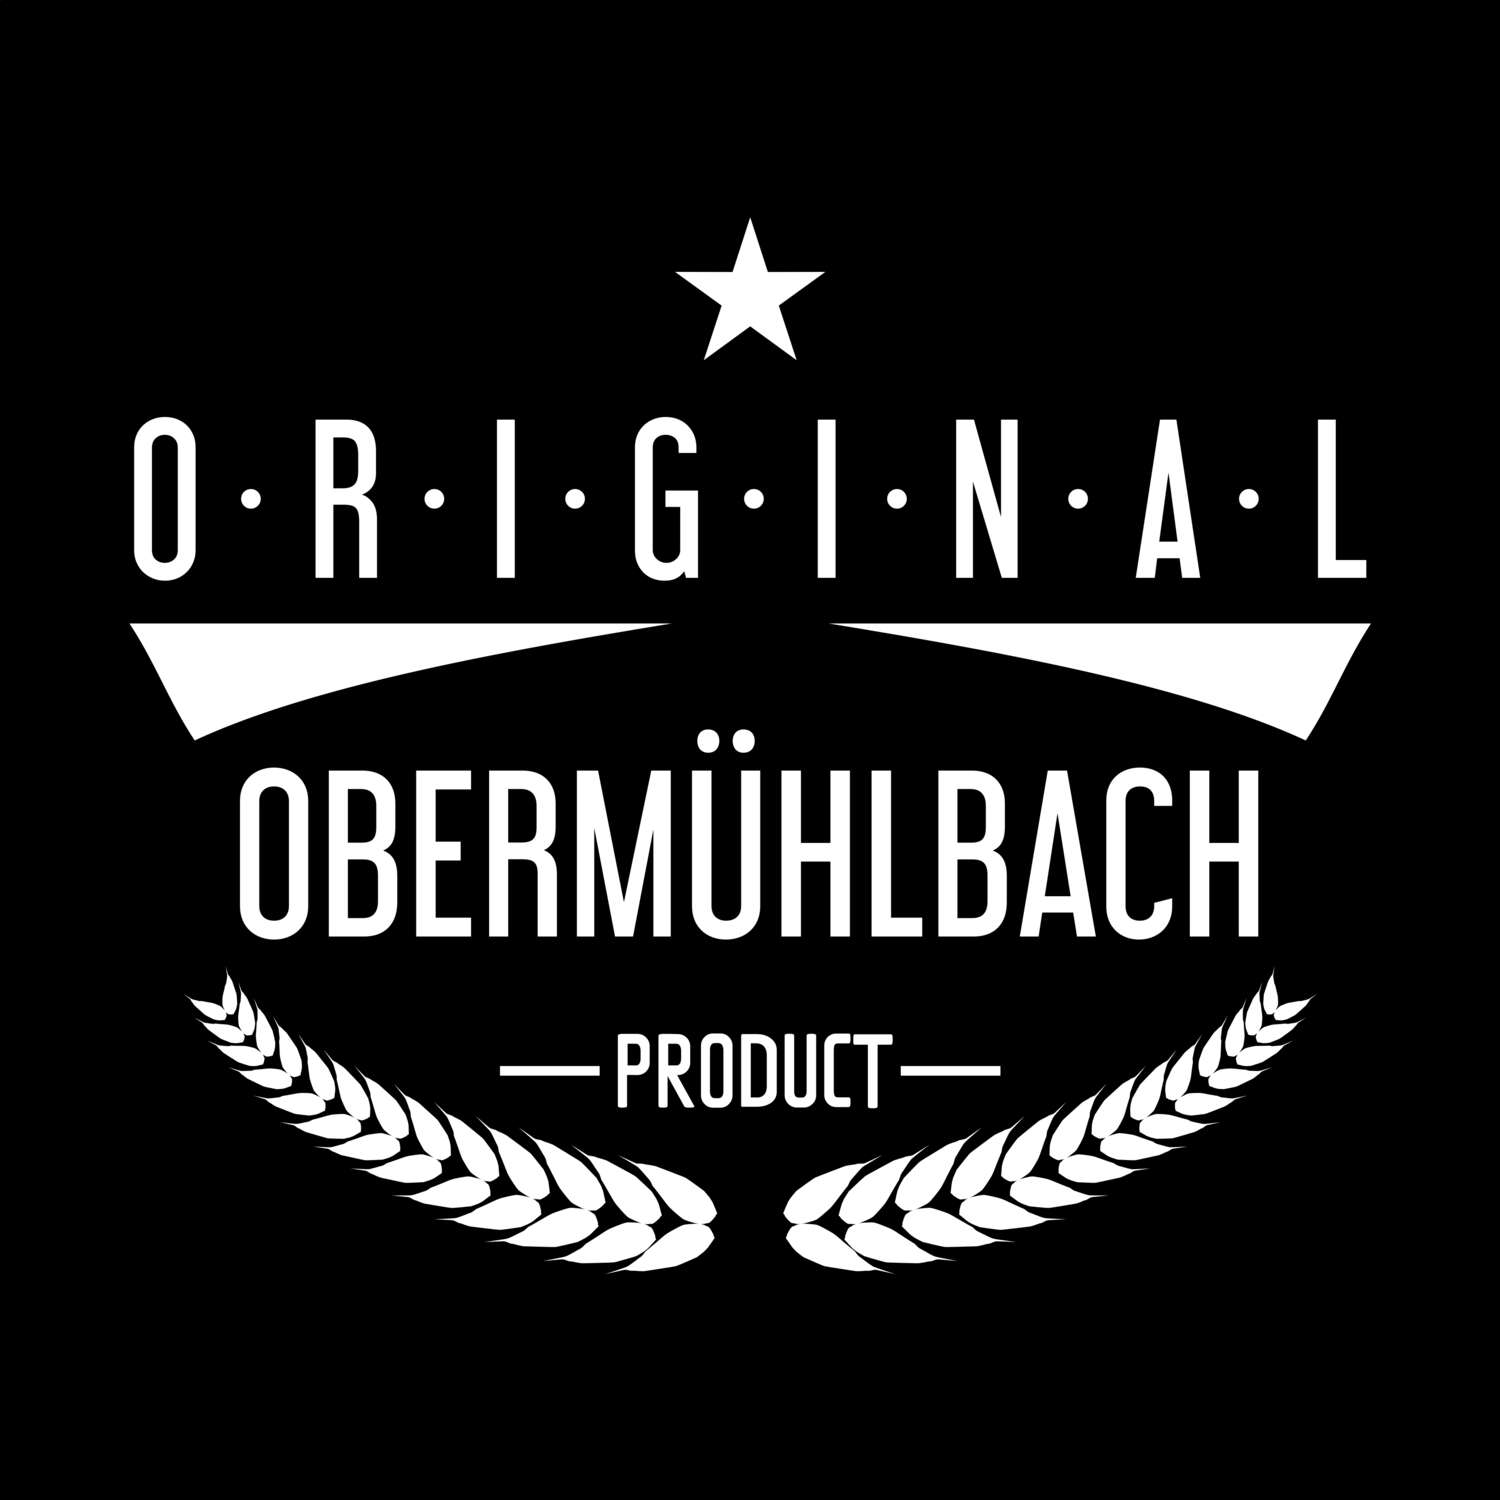 Obermühlbach T-Shirt »Original Product«